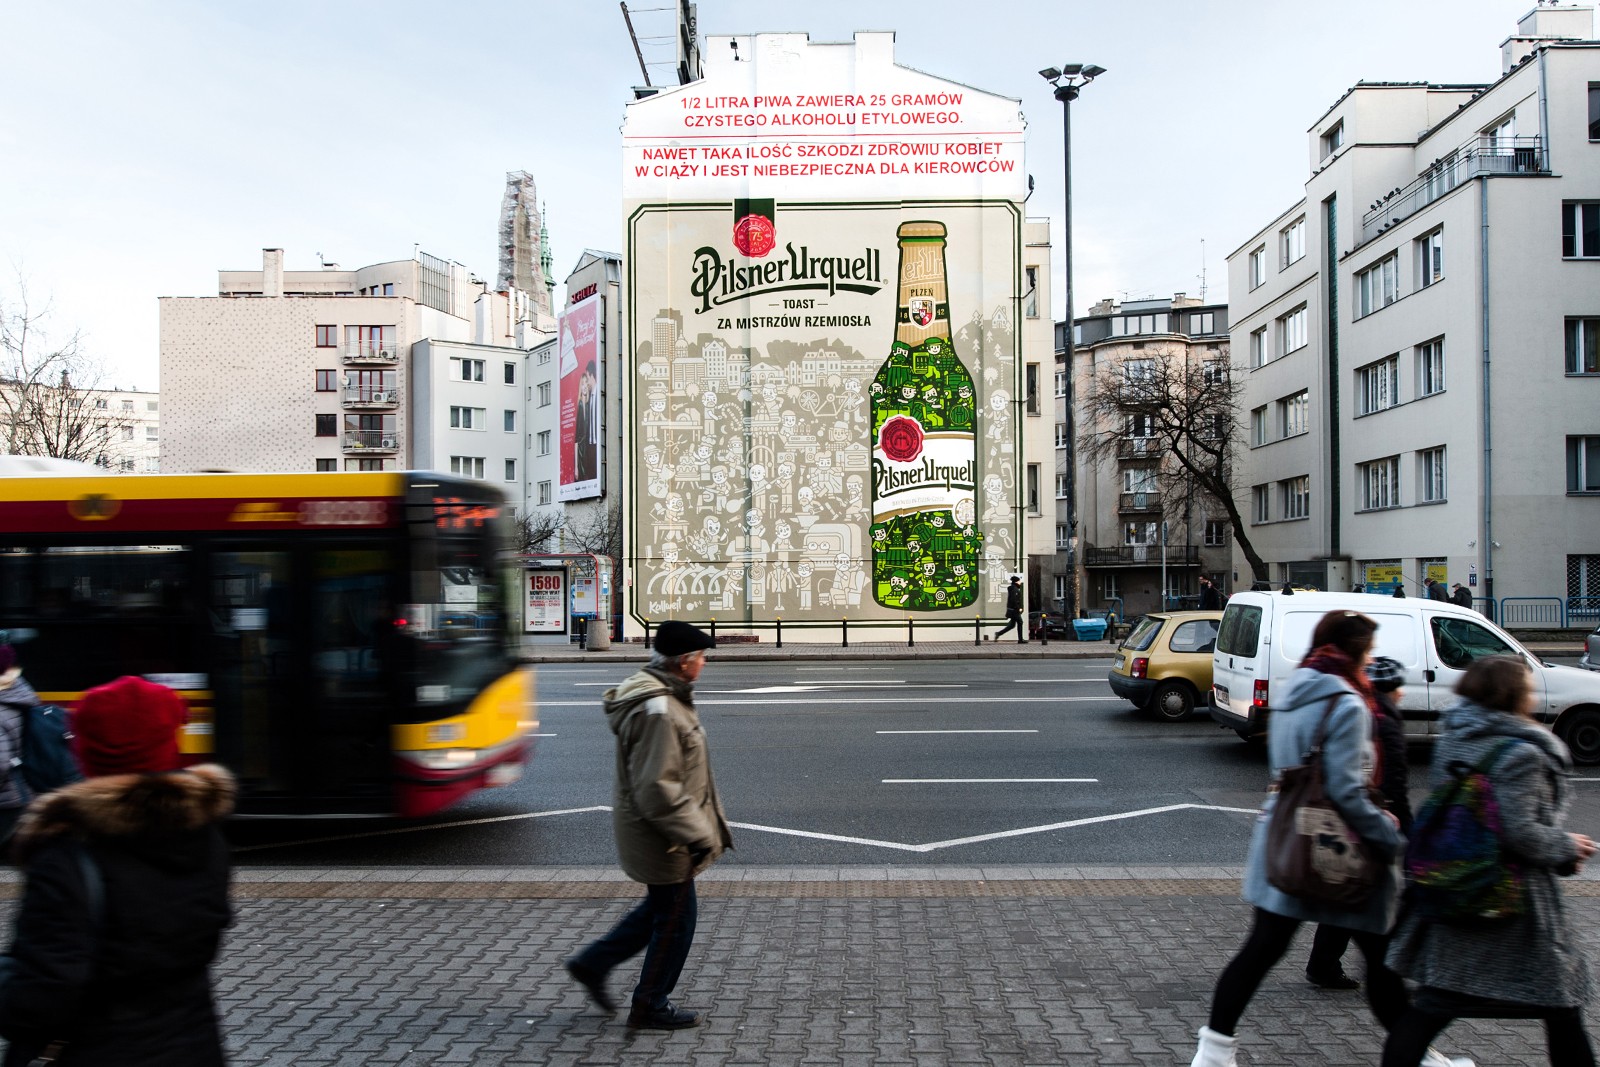 . Advertisement of Pilsner Urquell beer in Warsaw at the Politechnika metro station on Jaworzyńska street | Pilsner Urquell | Portfolio